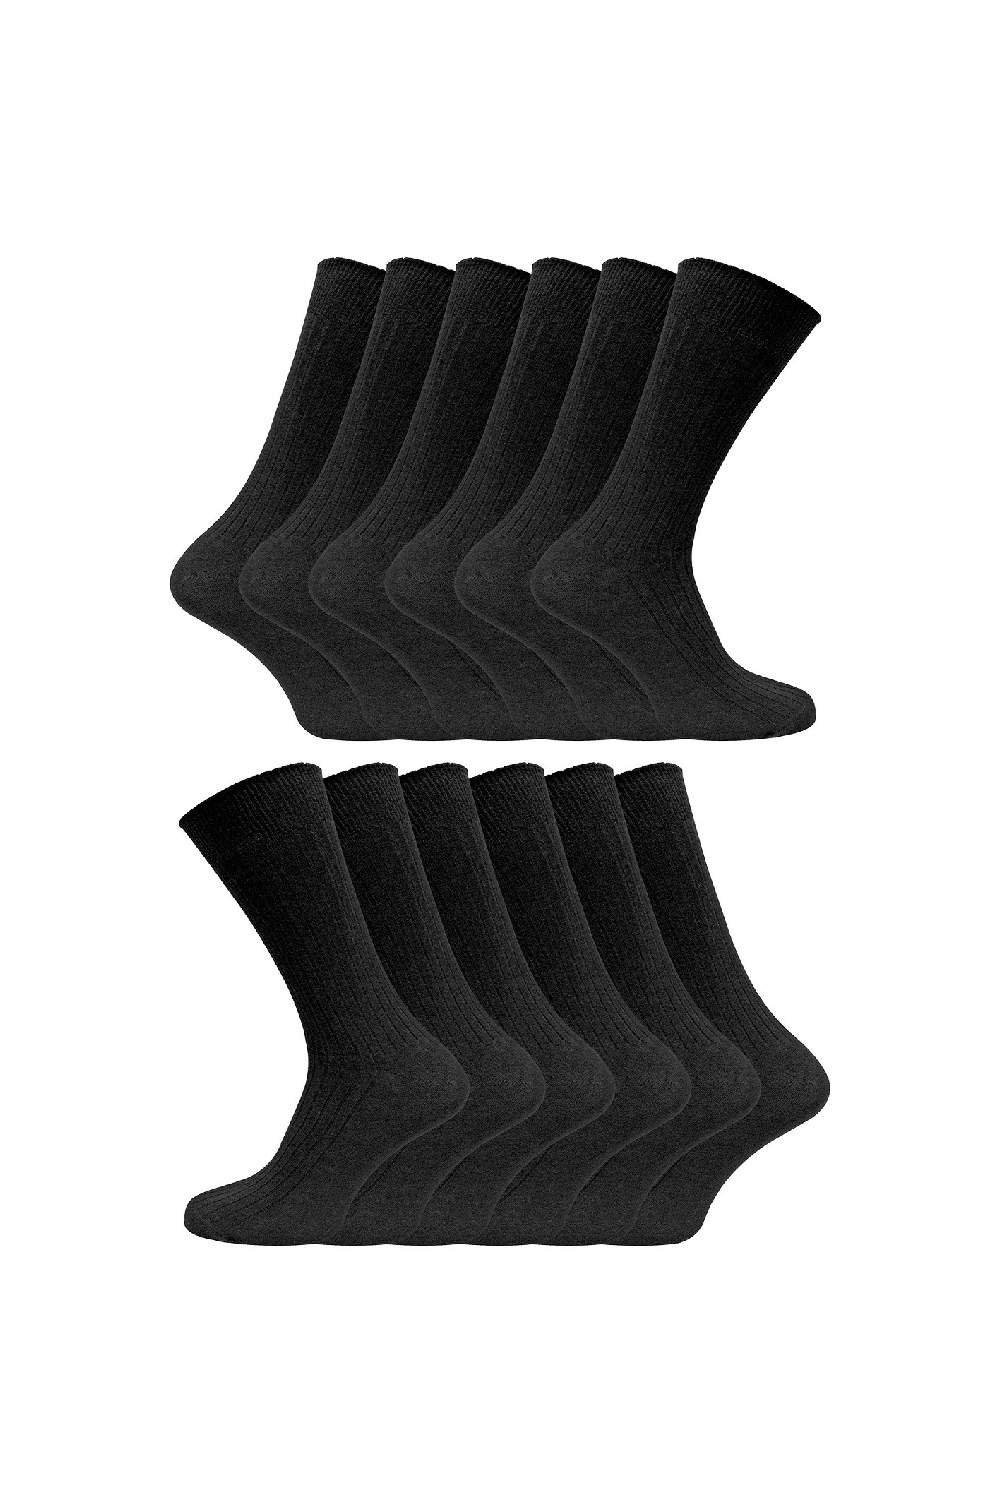 12 Pair Soft Breathable 100% Cotton Ribbed Dress Socks